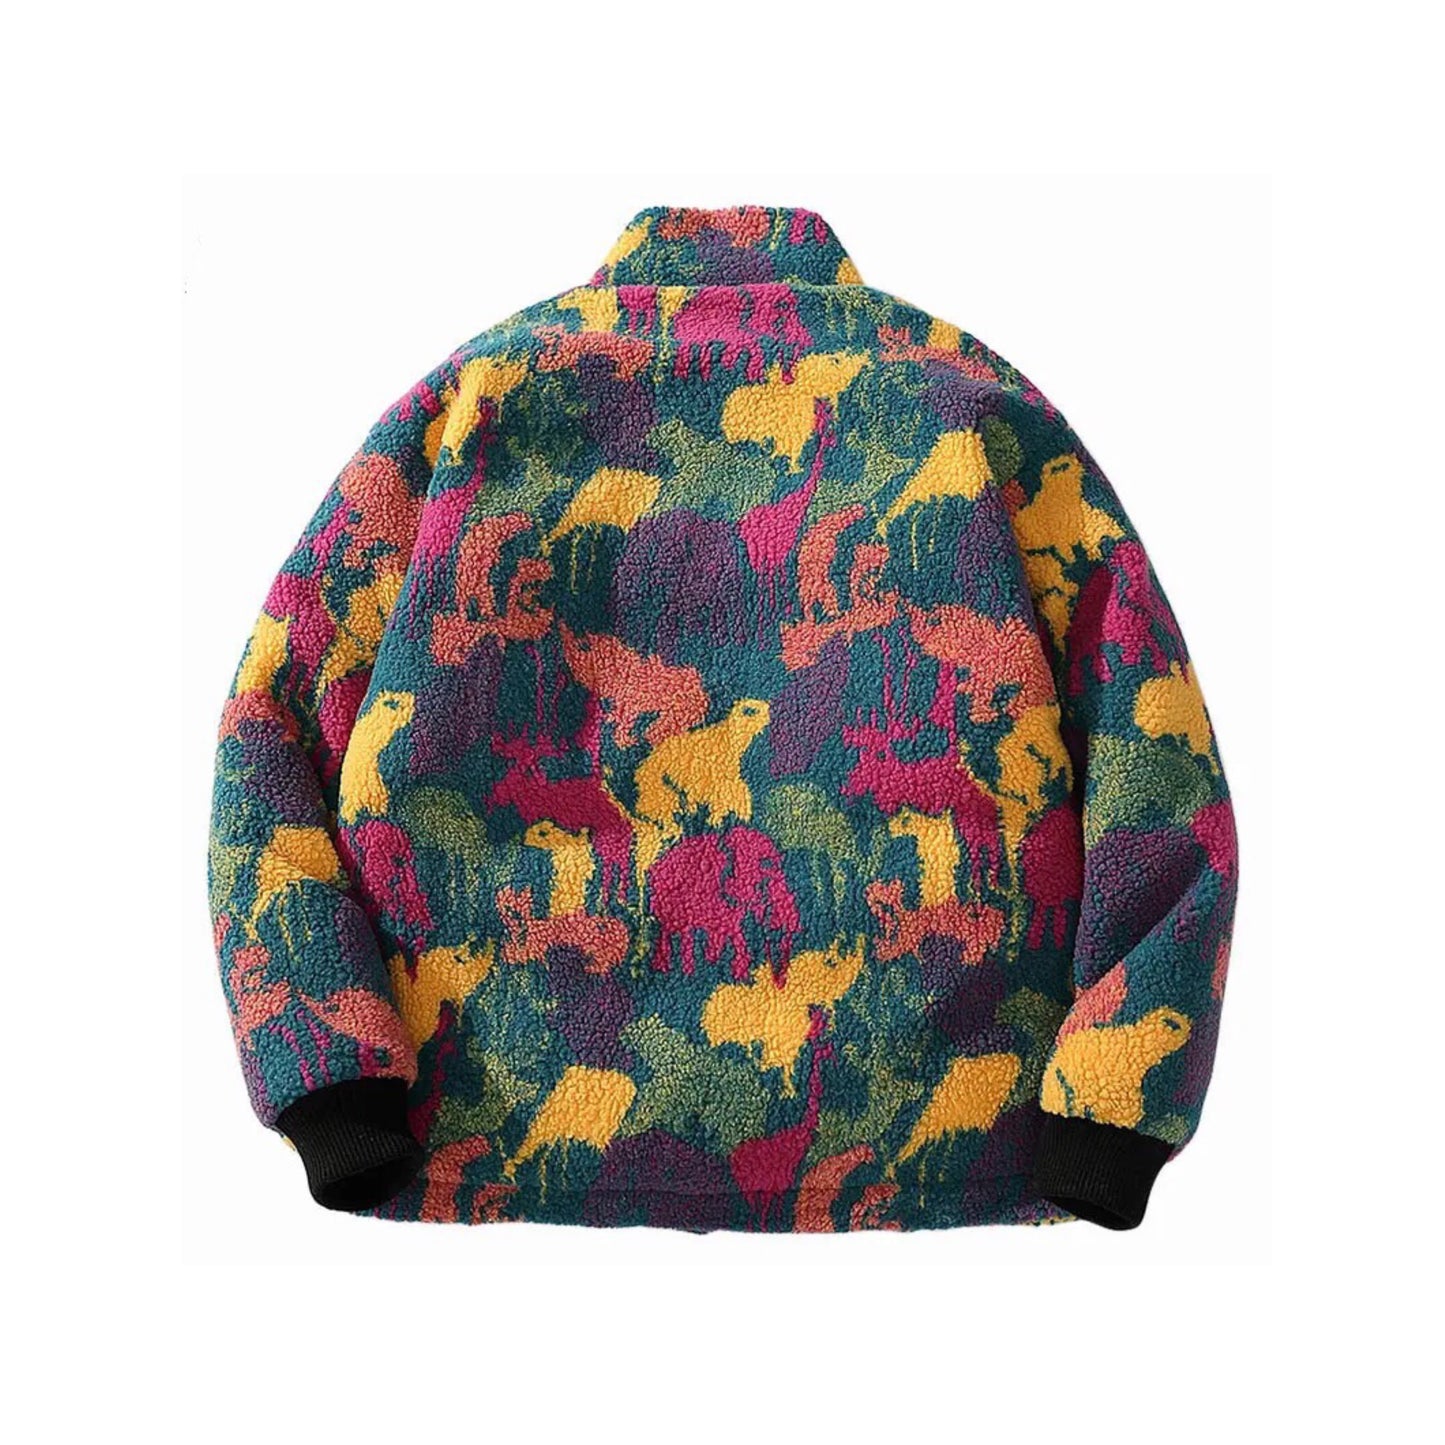 Colorful Camouflage Reversible Jacket